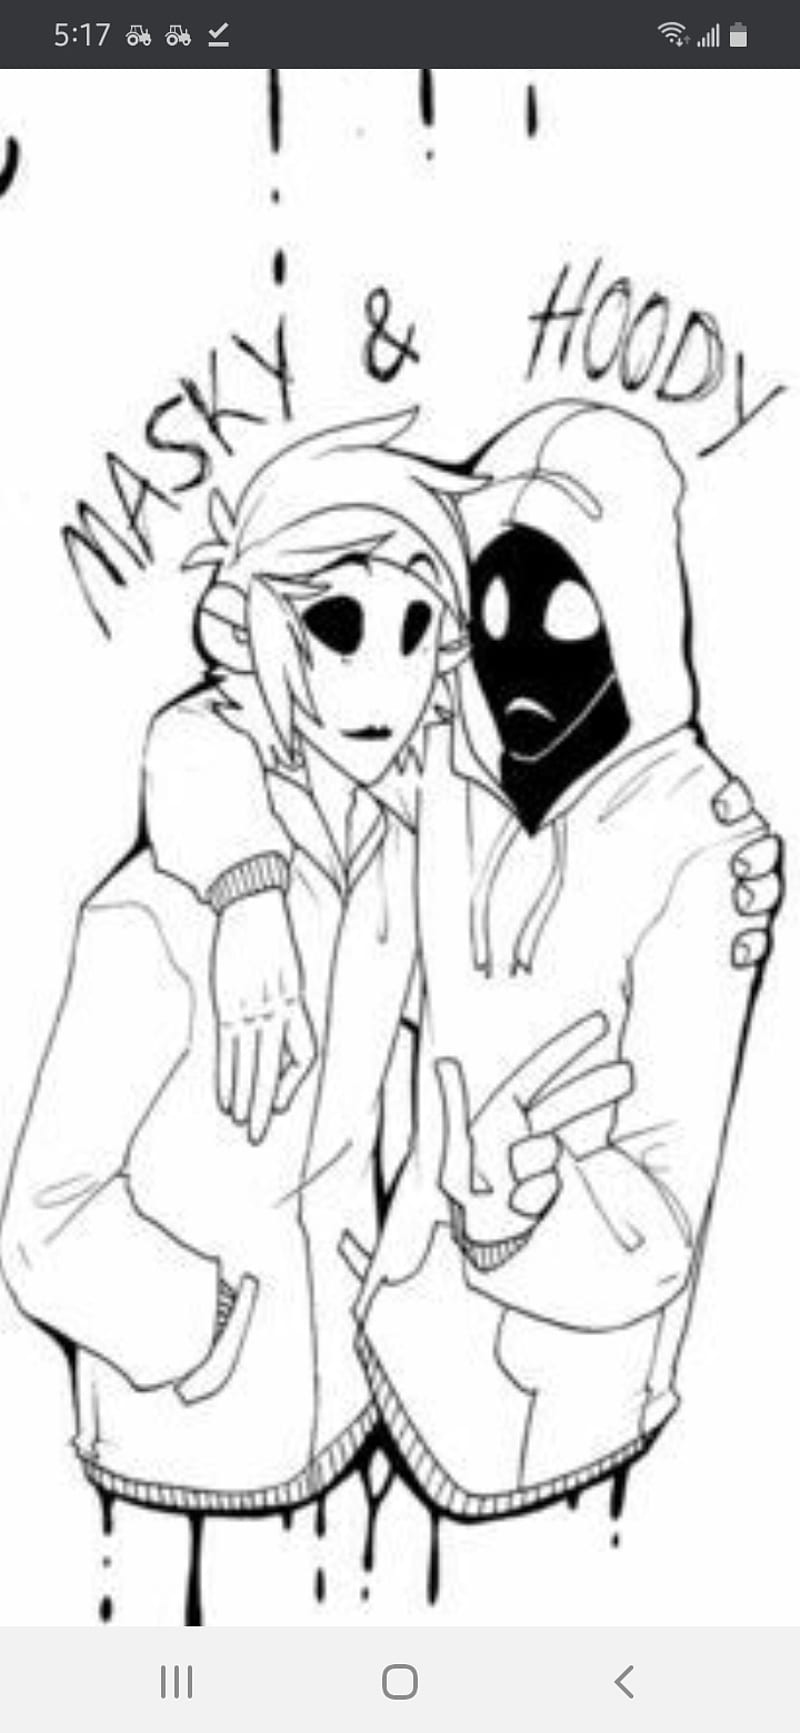 masky and hoodie creepypasta drawings